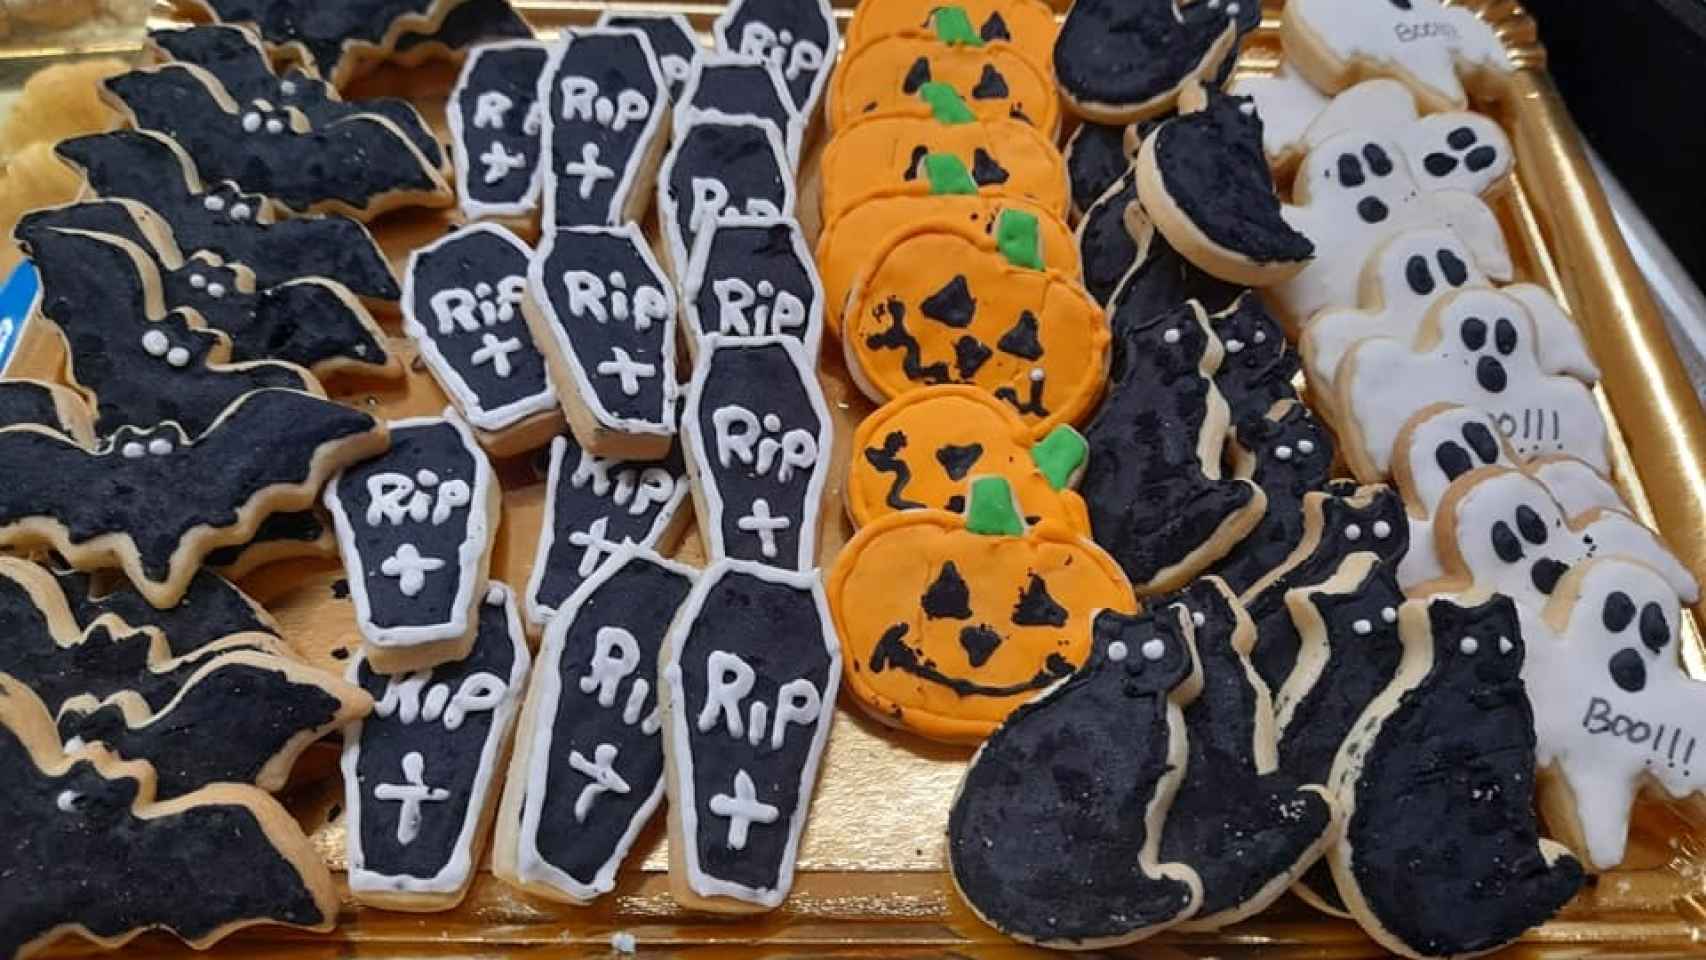 Las galletas decoradas con motivos de terror en Bardisa Pérez.